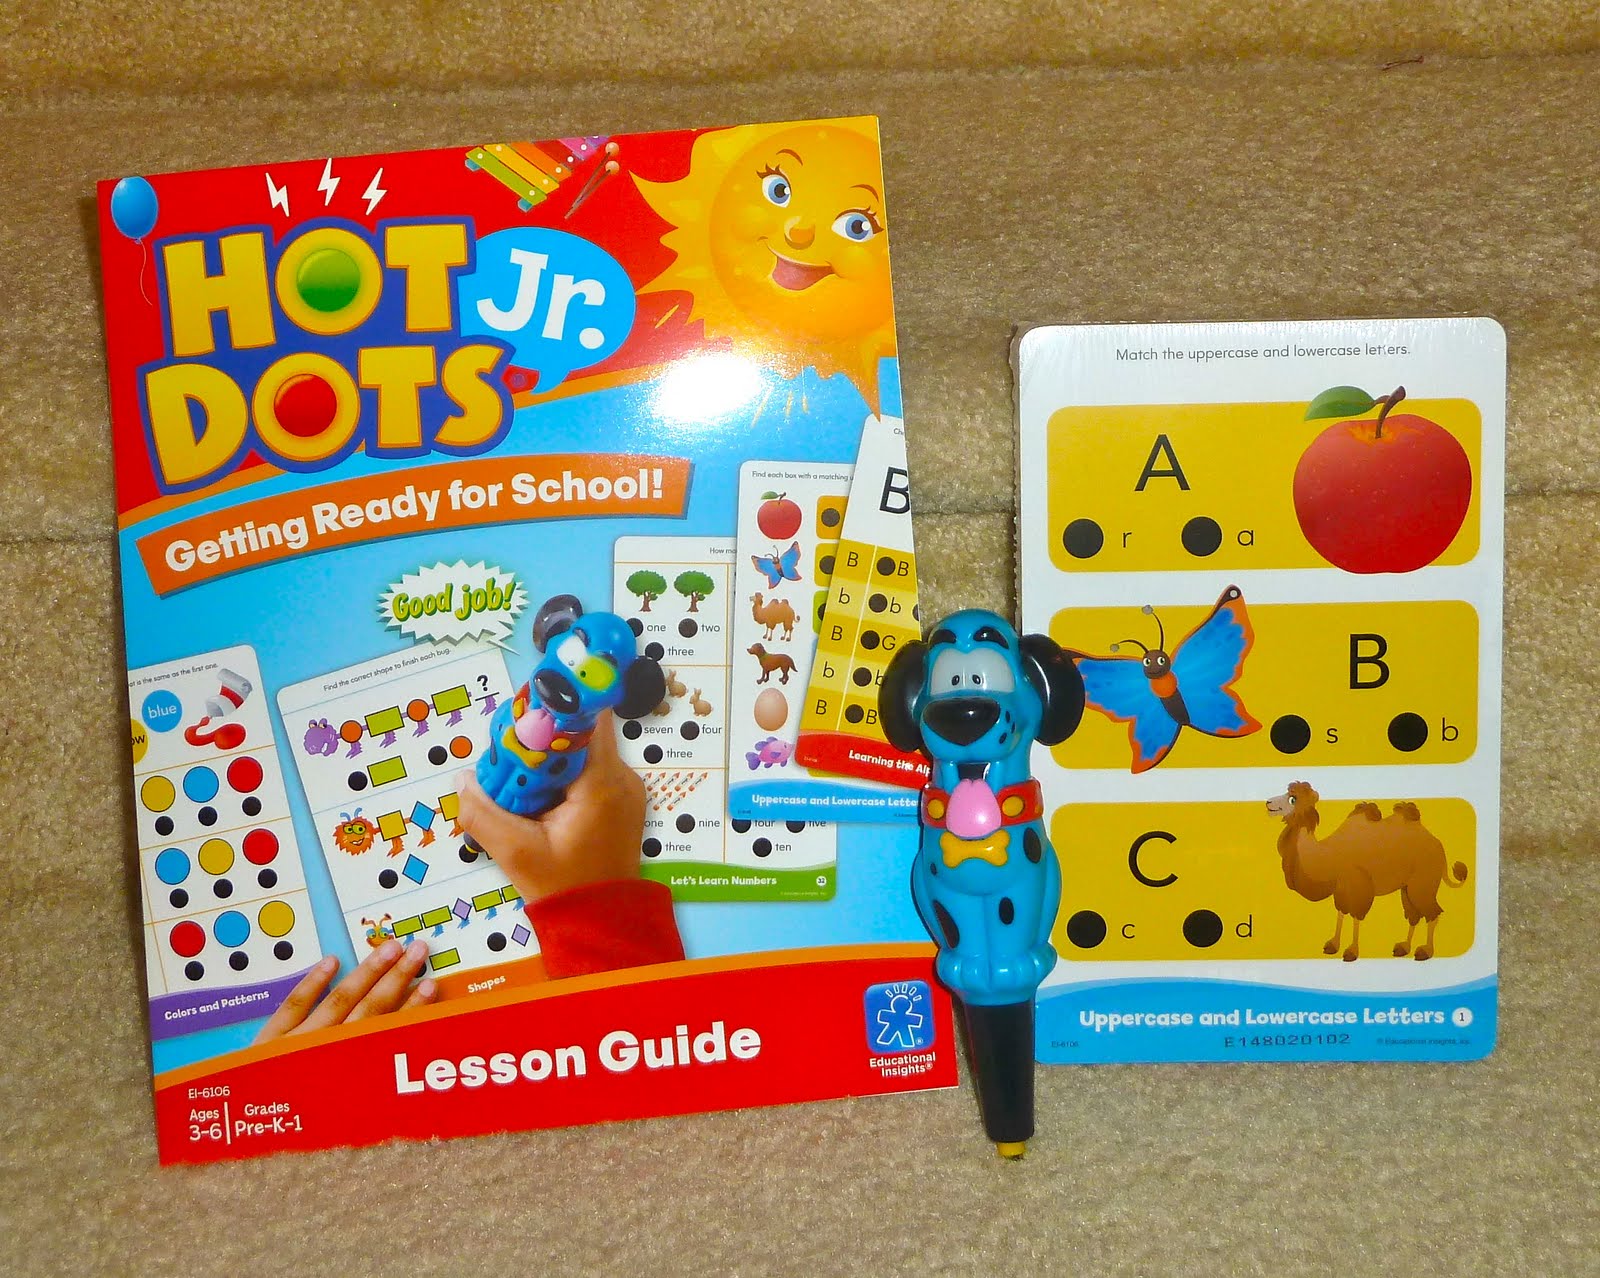 Educational Insights Phonics Fun Hot Dots Jr Set, 80 Cards and 1 Pen